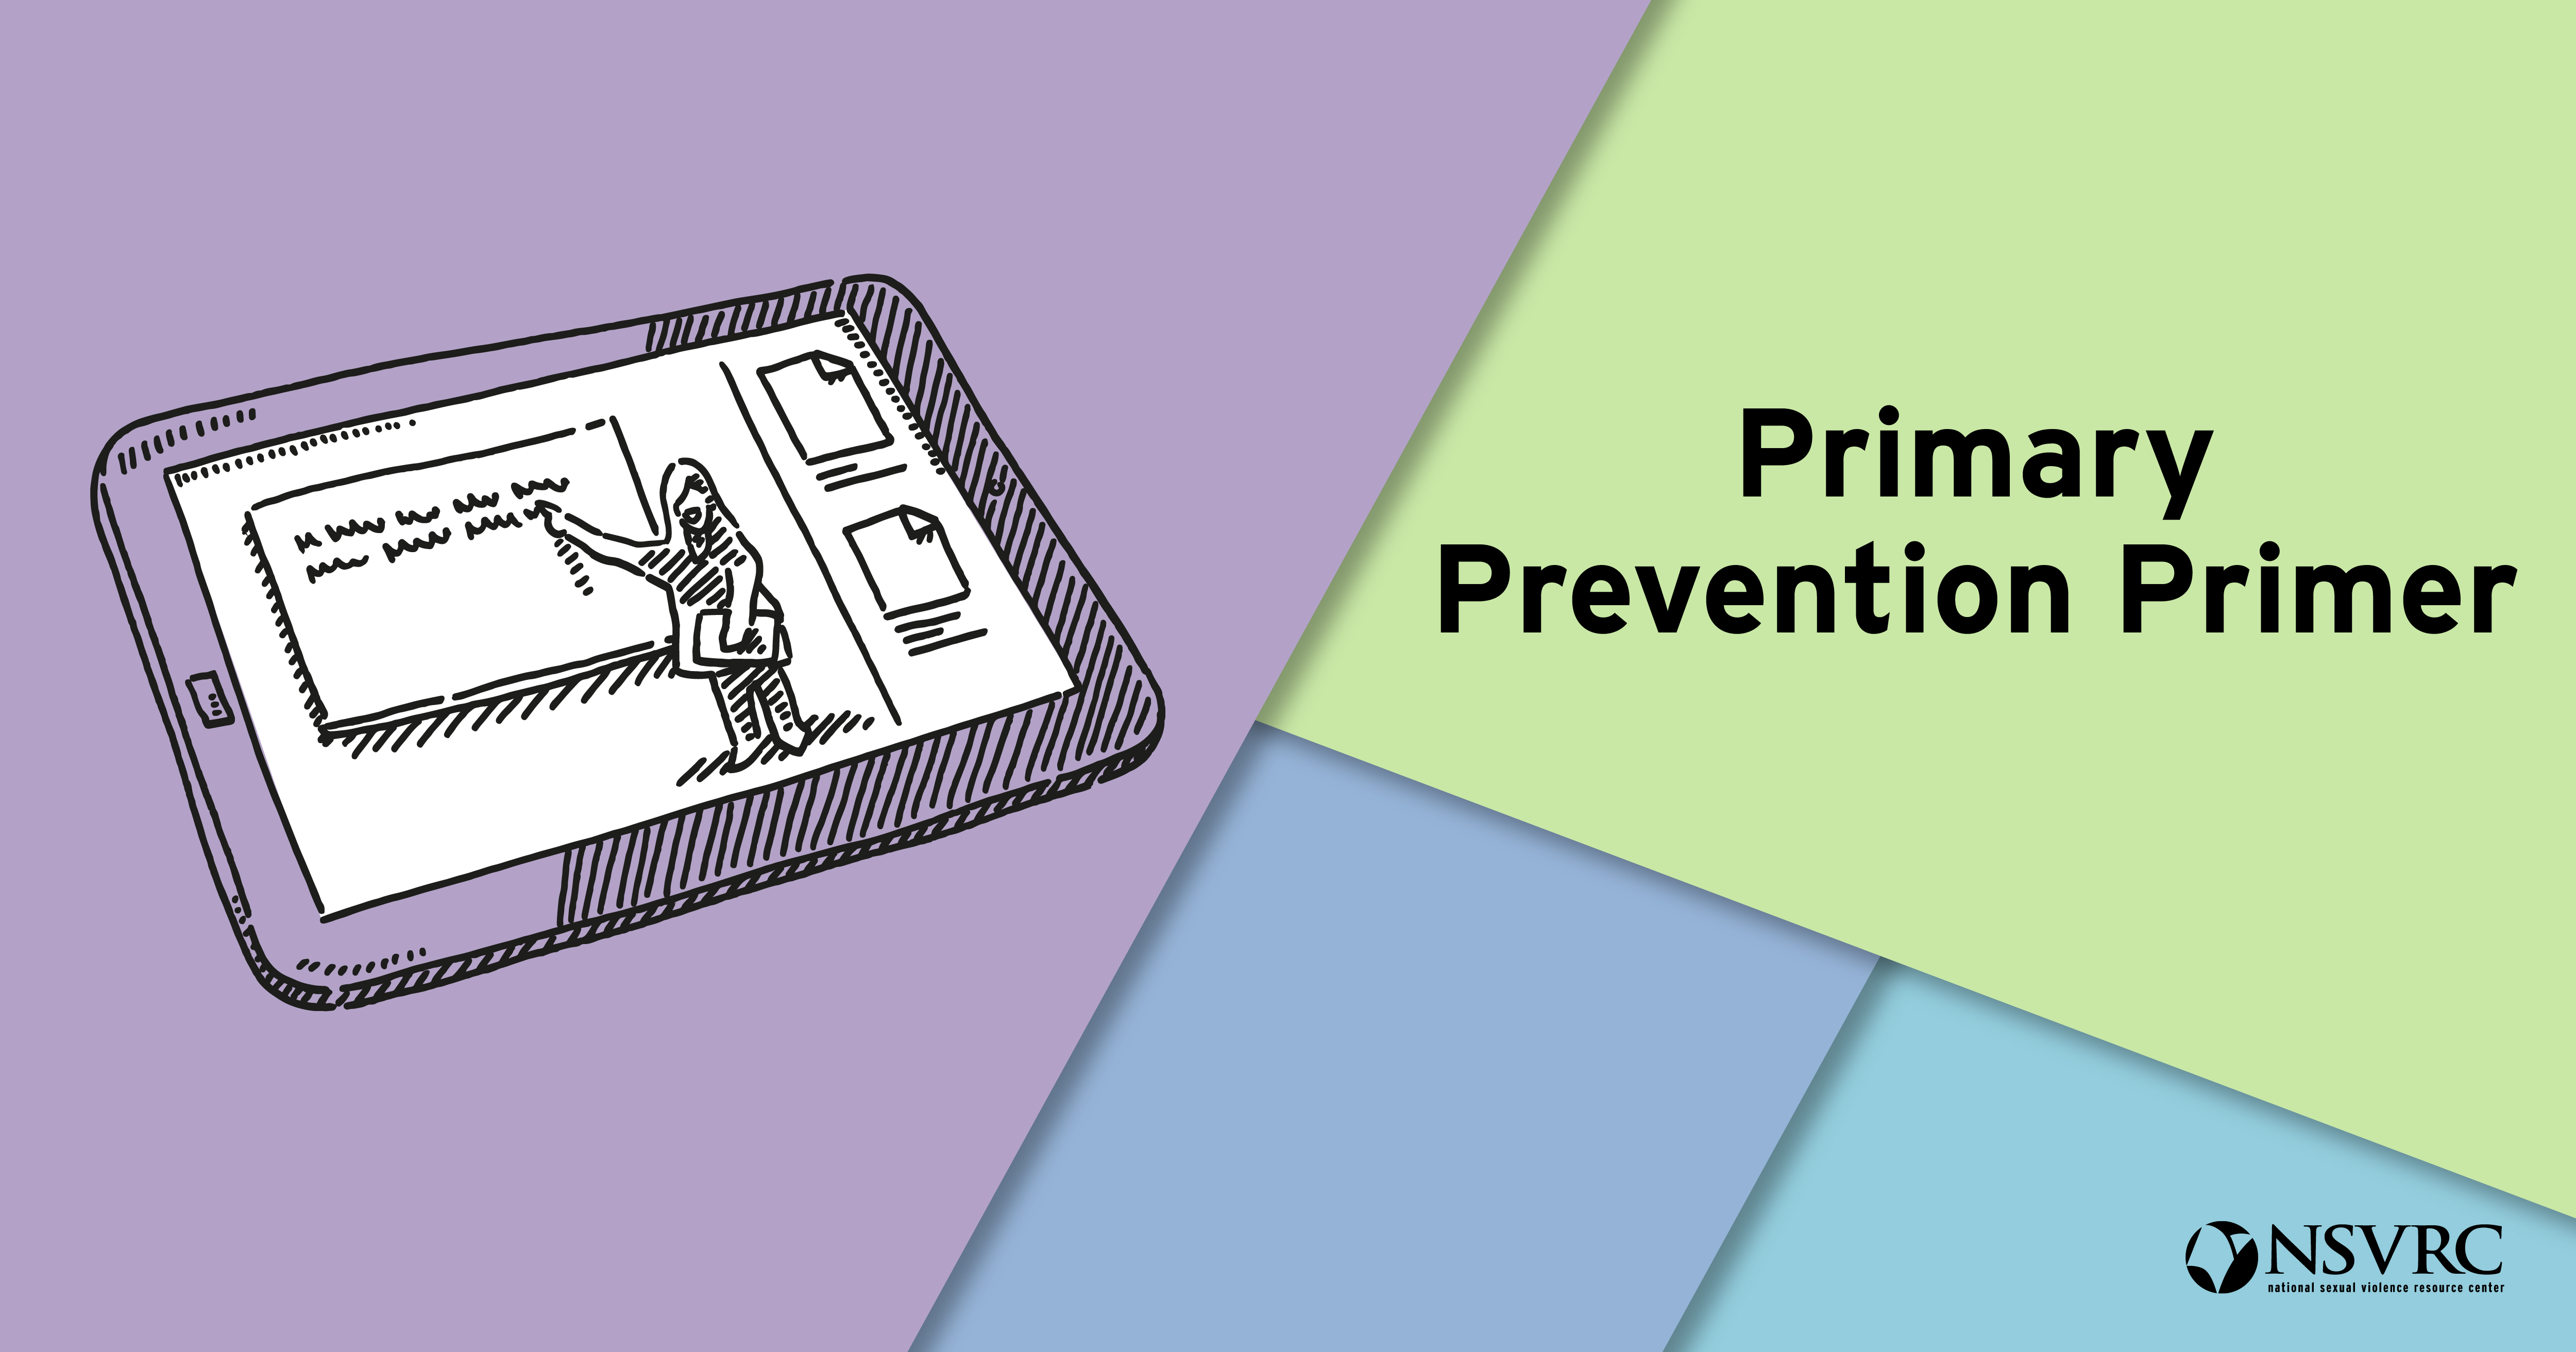 Primary Prevention Primer